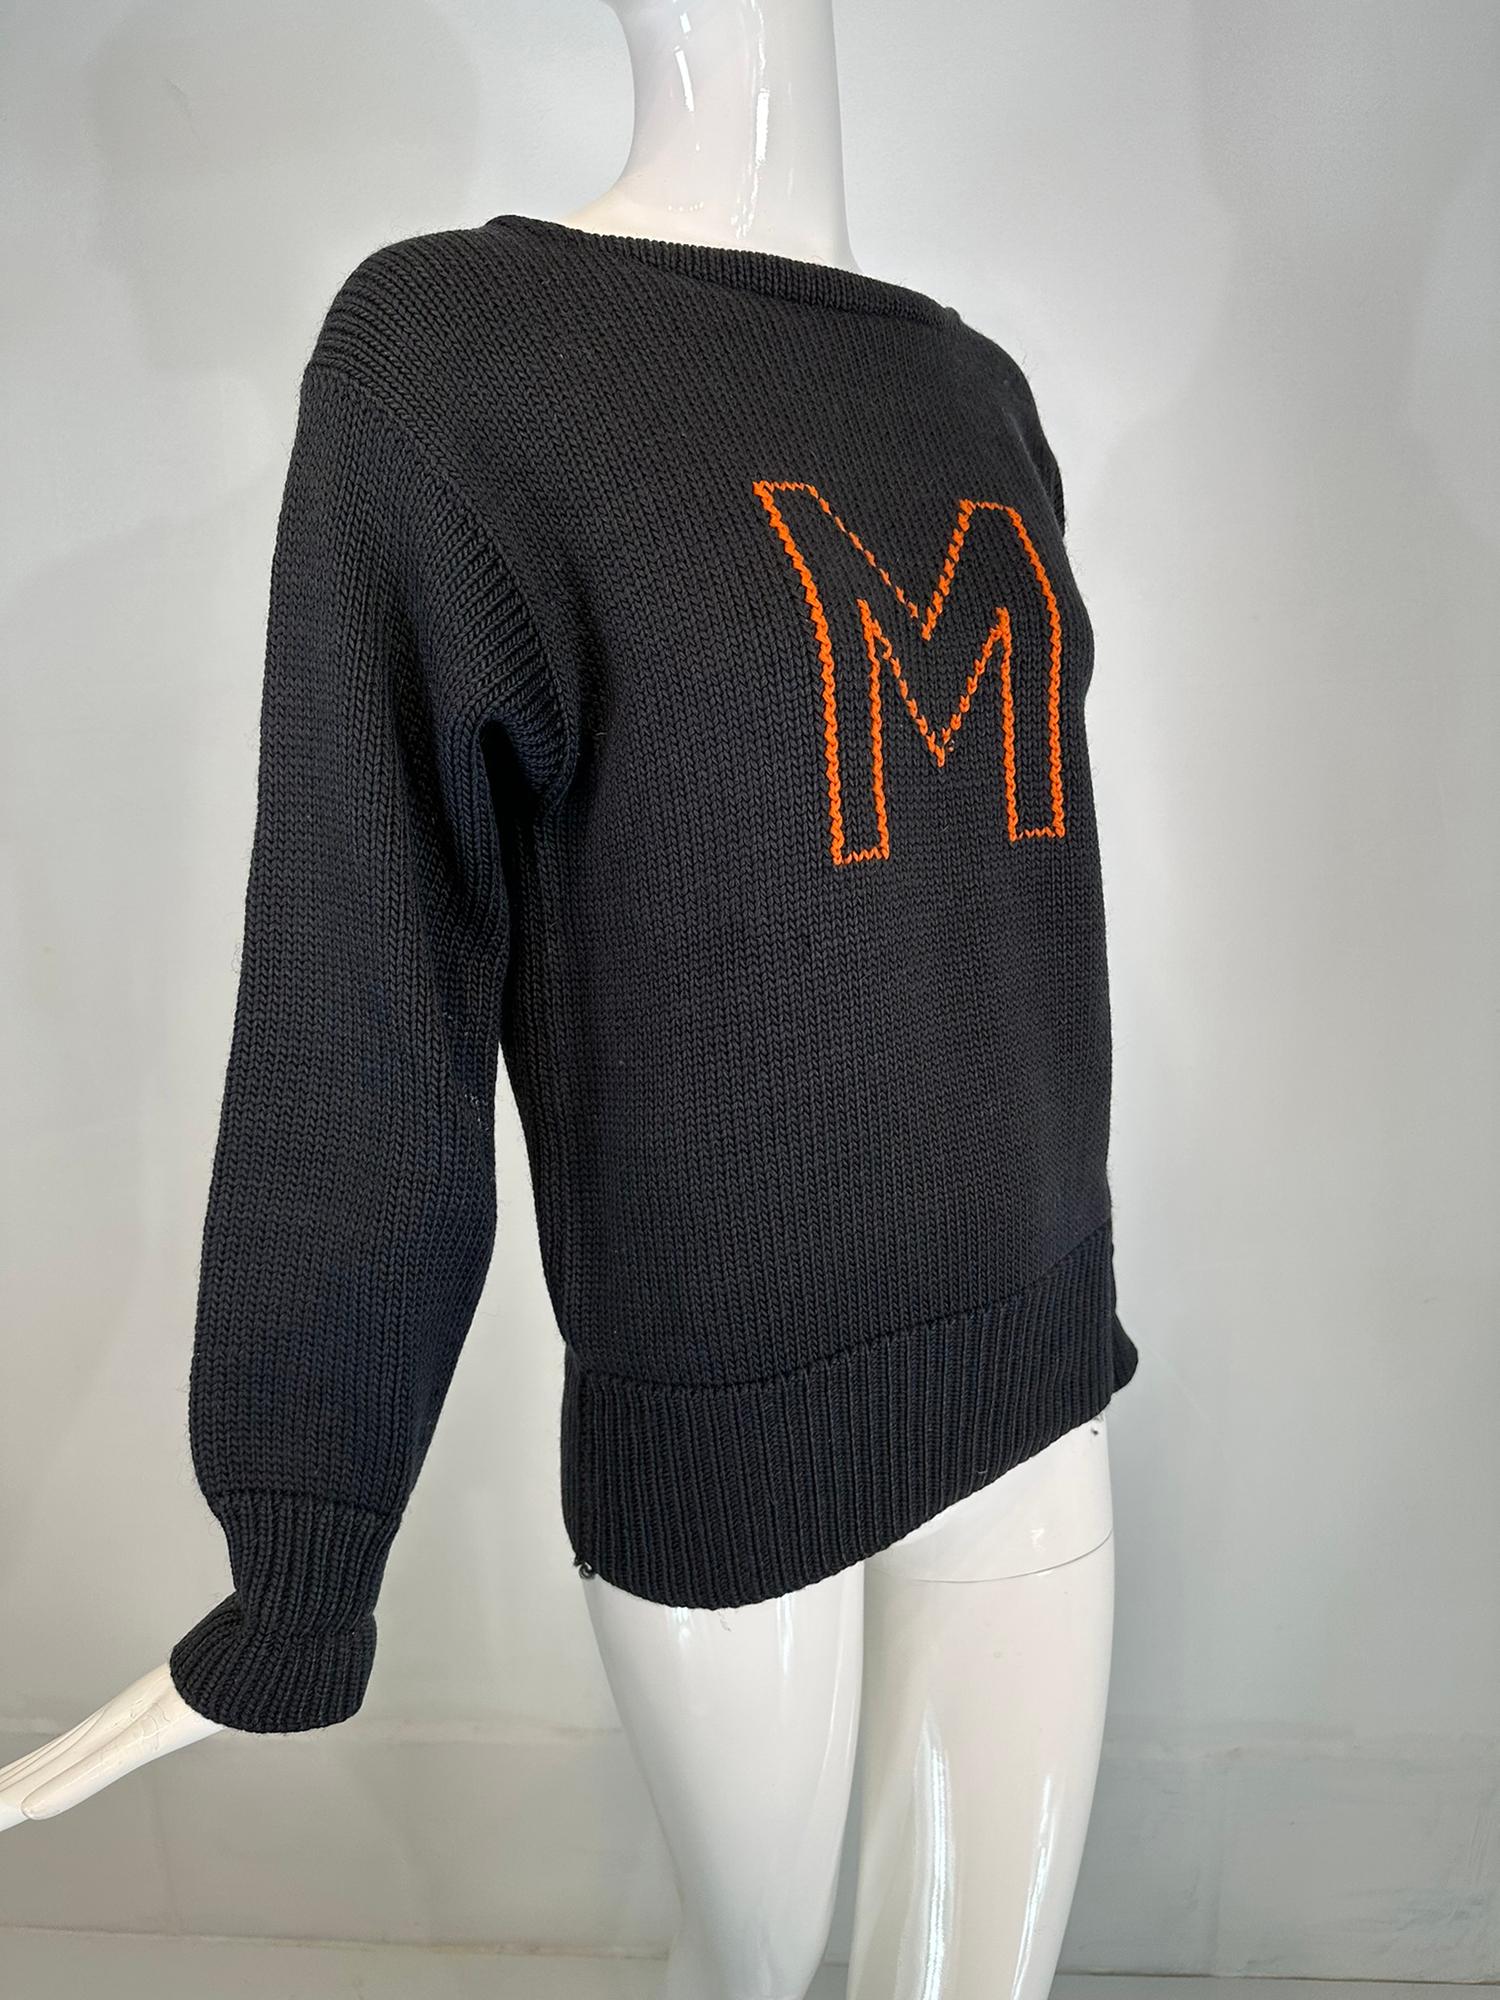 Milton Academy Mass. Early 1900s Varsity Knit School Sweater Blue & Orange For Sale 9